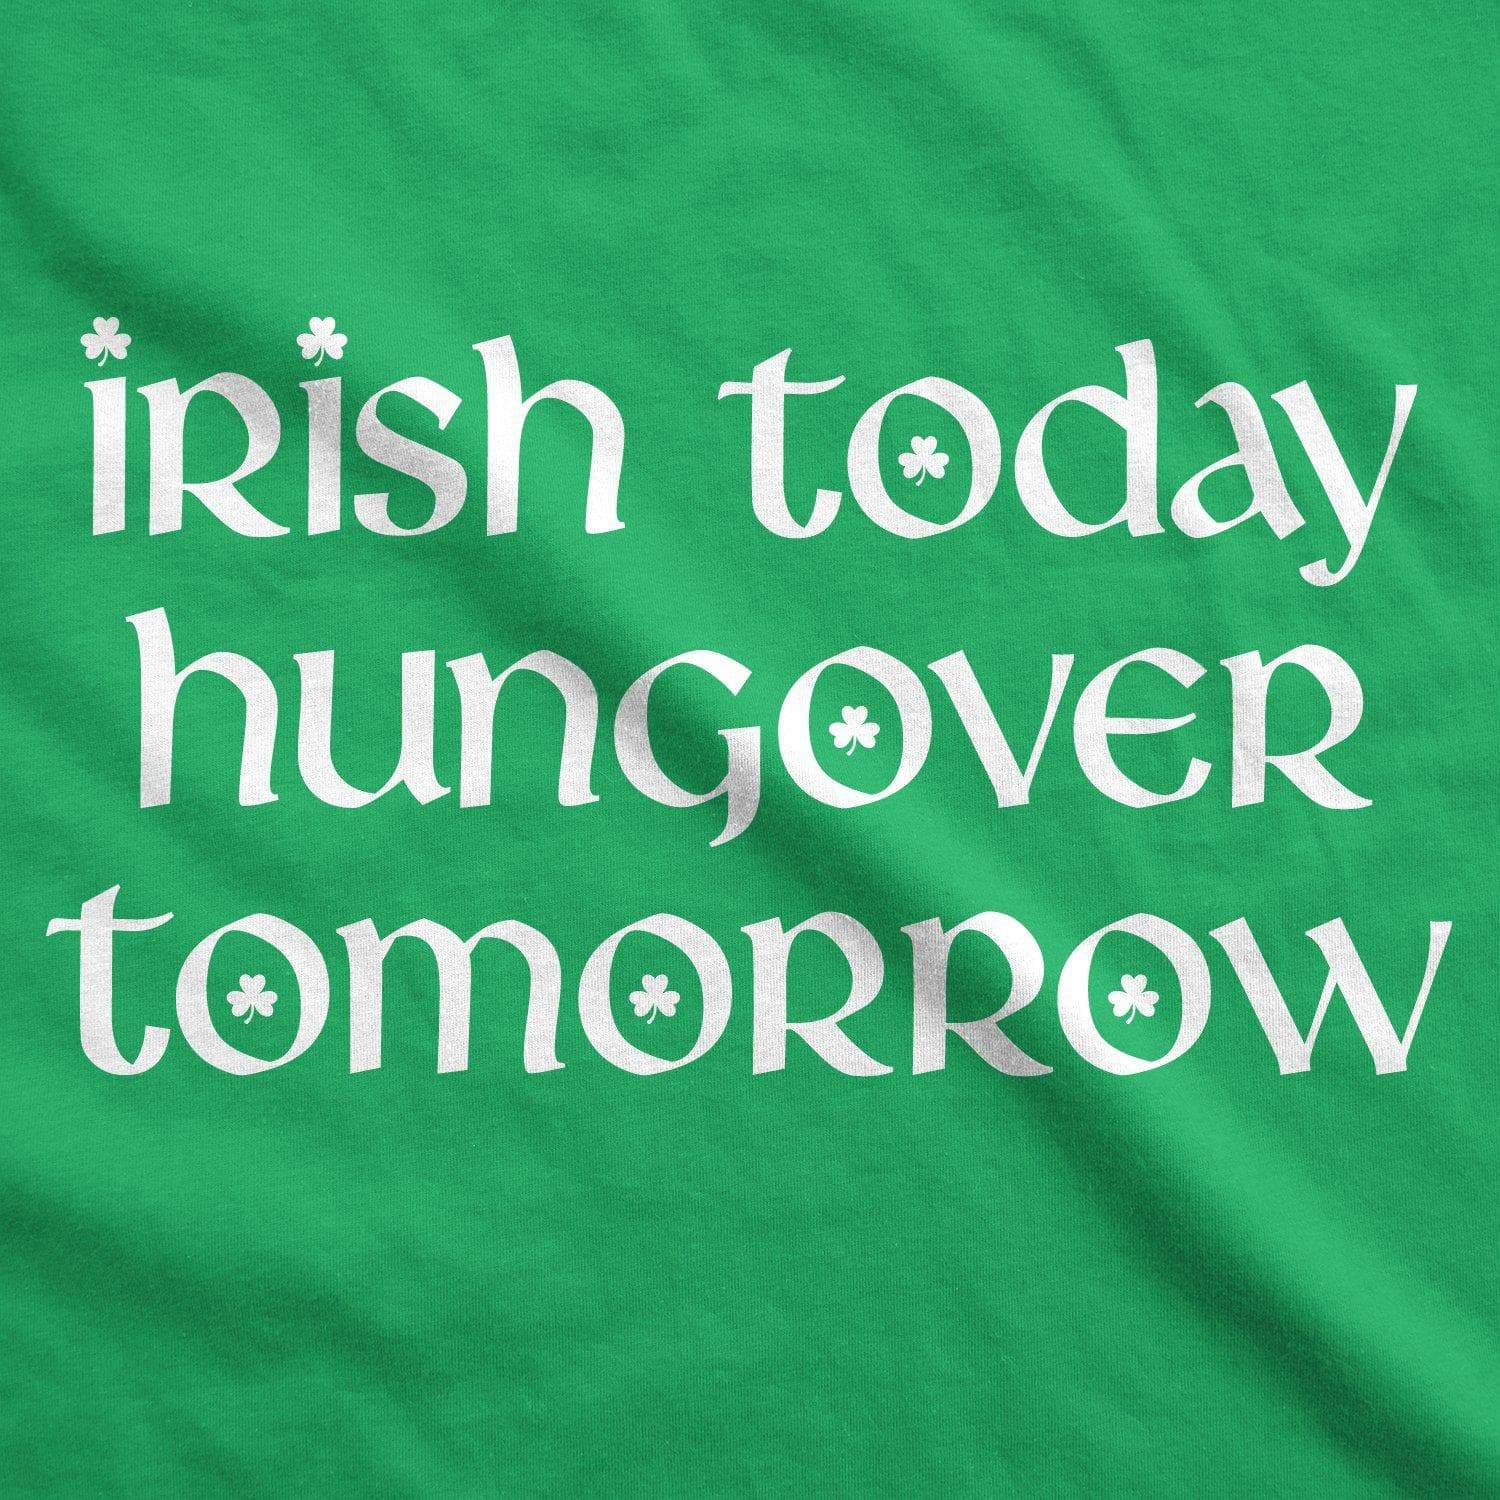 Irish Today Hungover Tomorrow Men's Tshirt  -  Crazy Dog T-Shirts